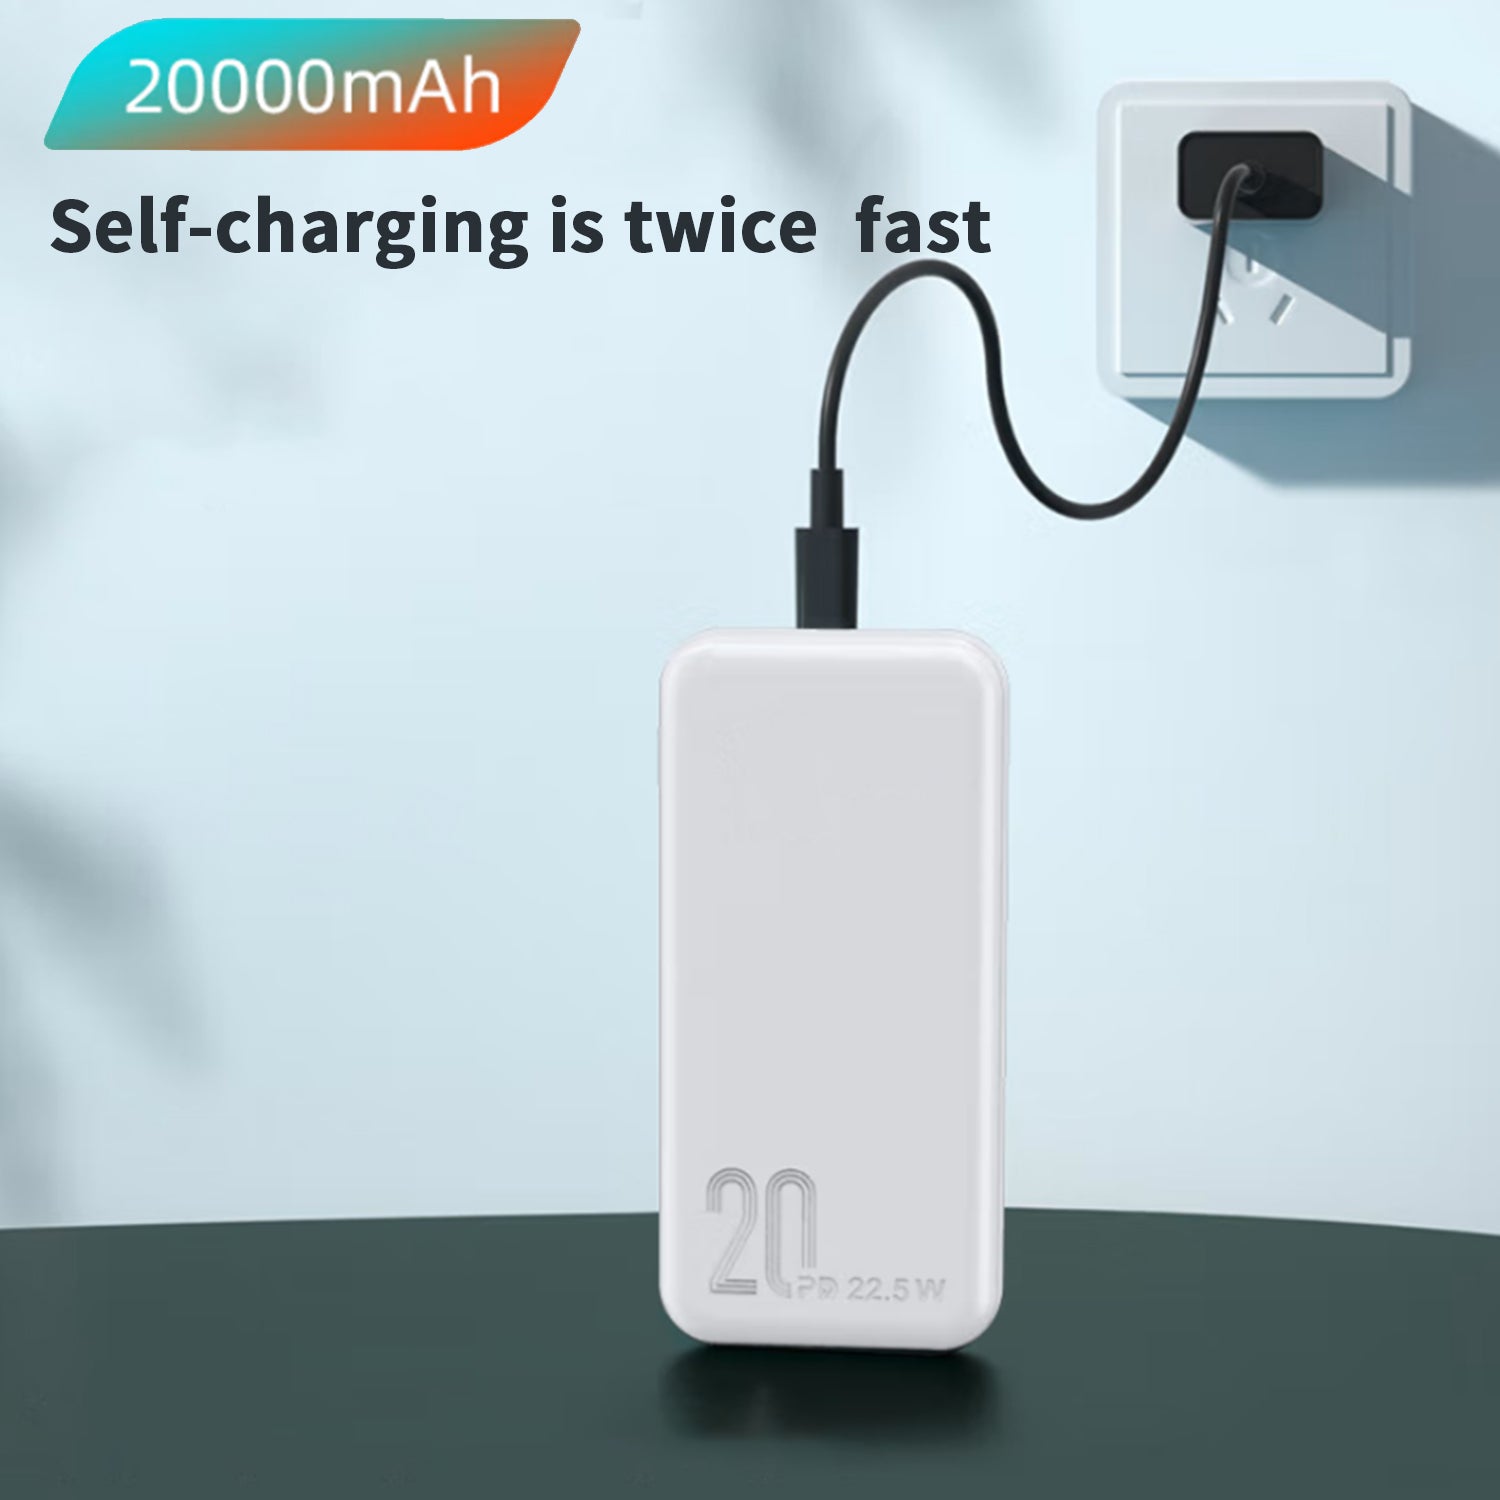 20000mAh 22.5W PD 22.5W fast charging power bank